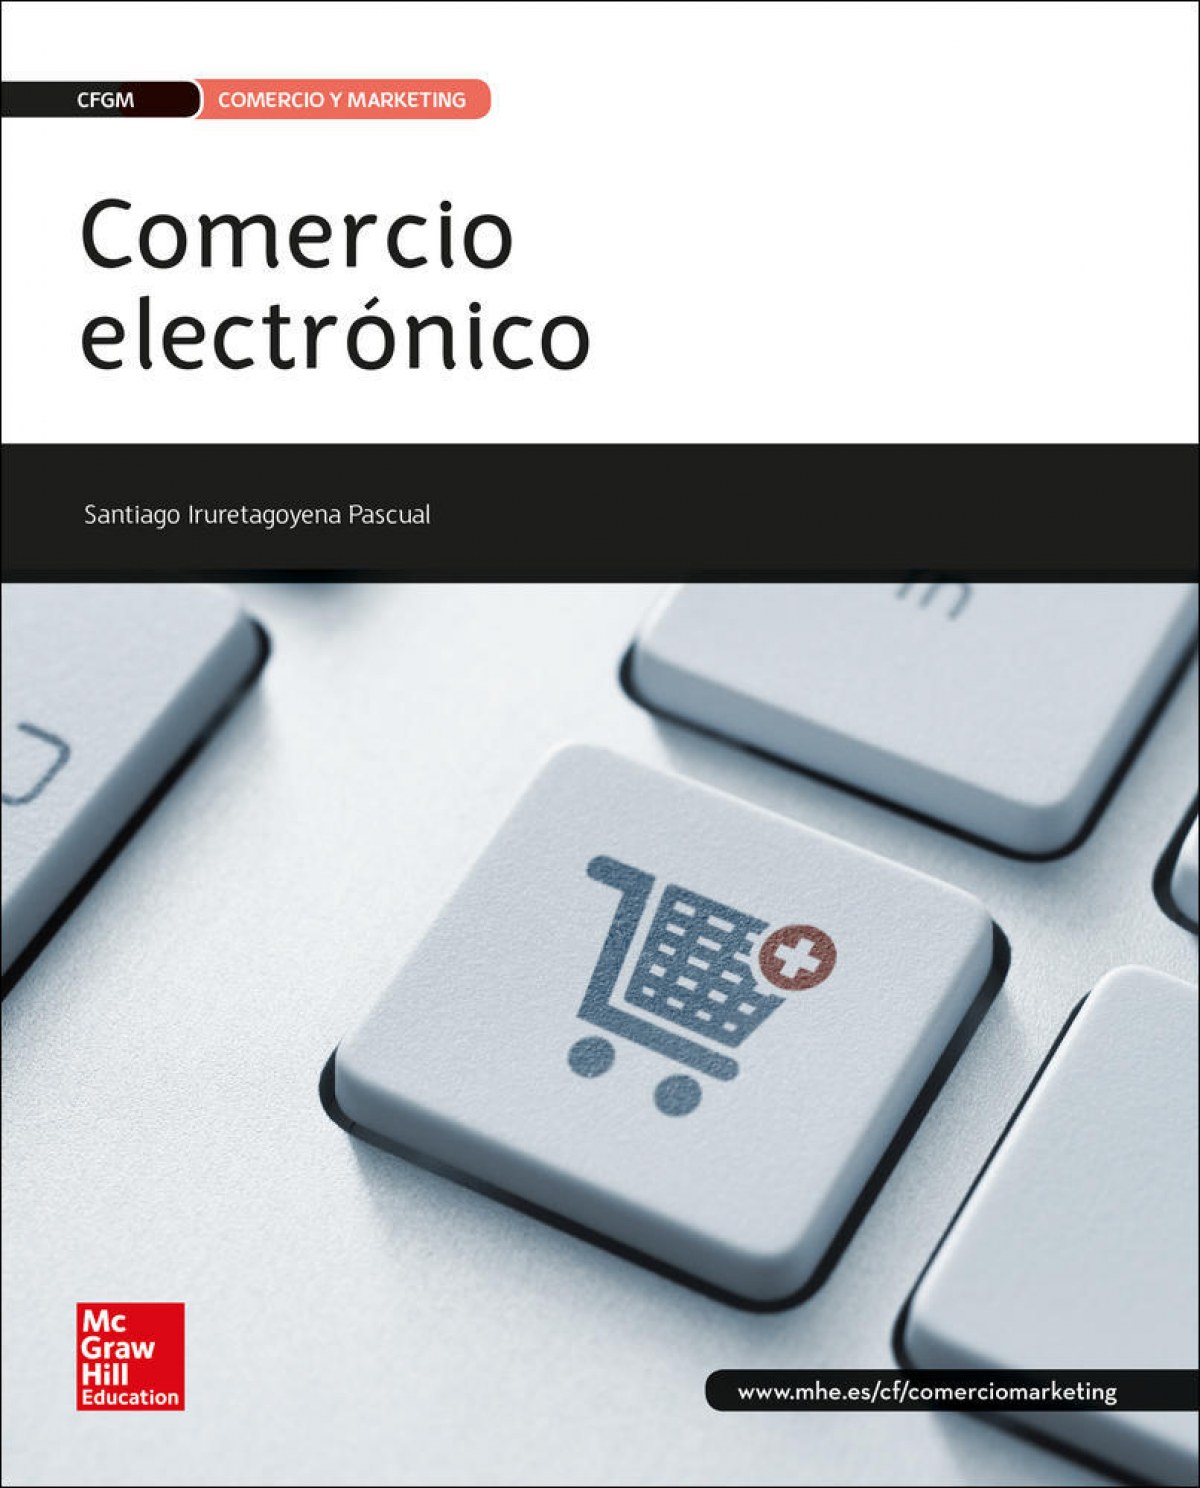 Comercio electronico. Técnico actividades comerciales